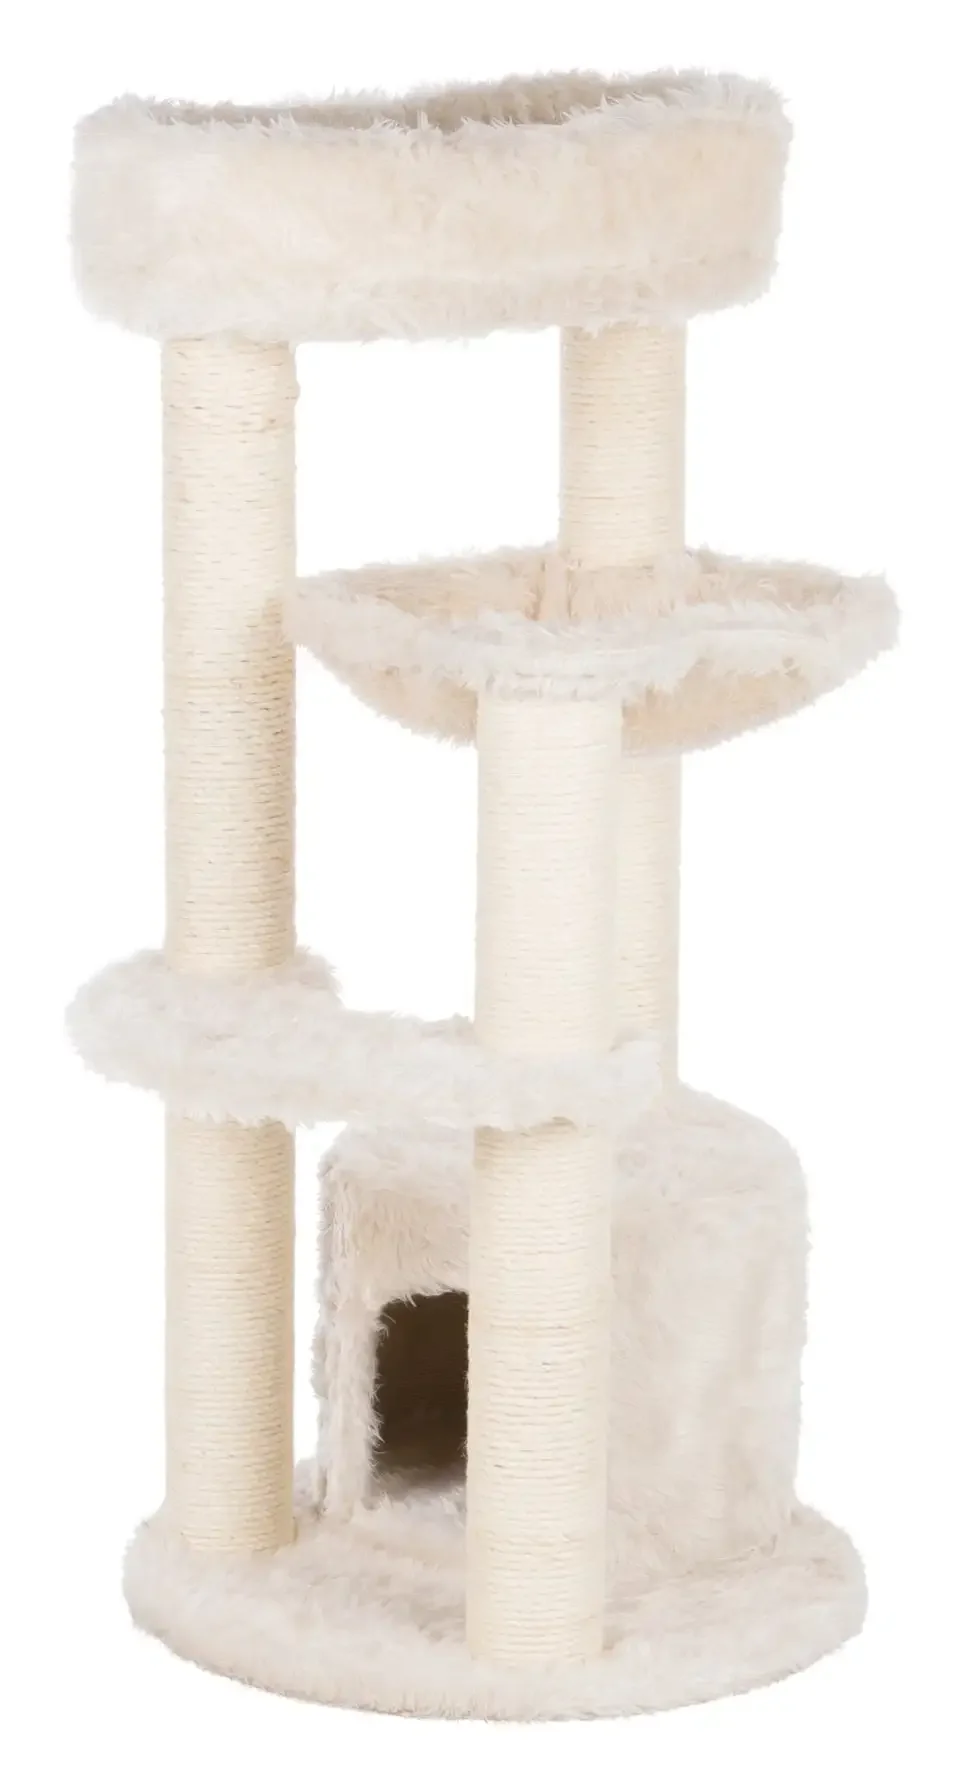 

TRIXIE Baza Junior Jute & Plush 3-Level 39" Cat Tower, Scratching Posts and Condo, Cream